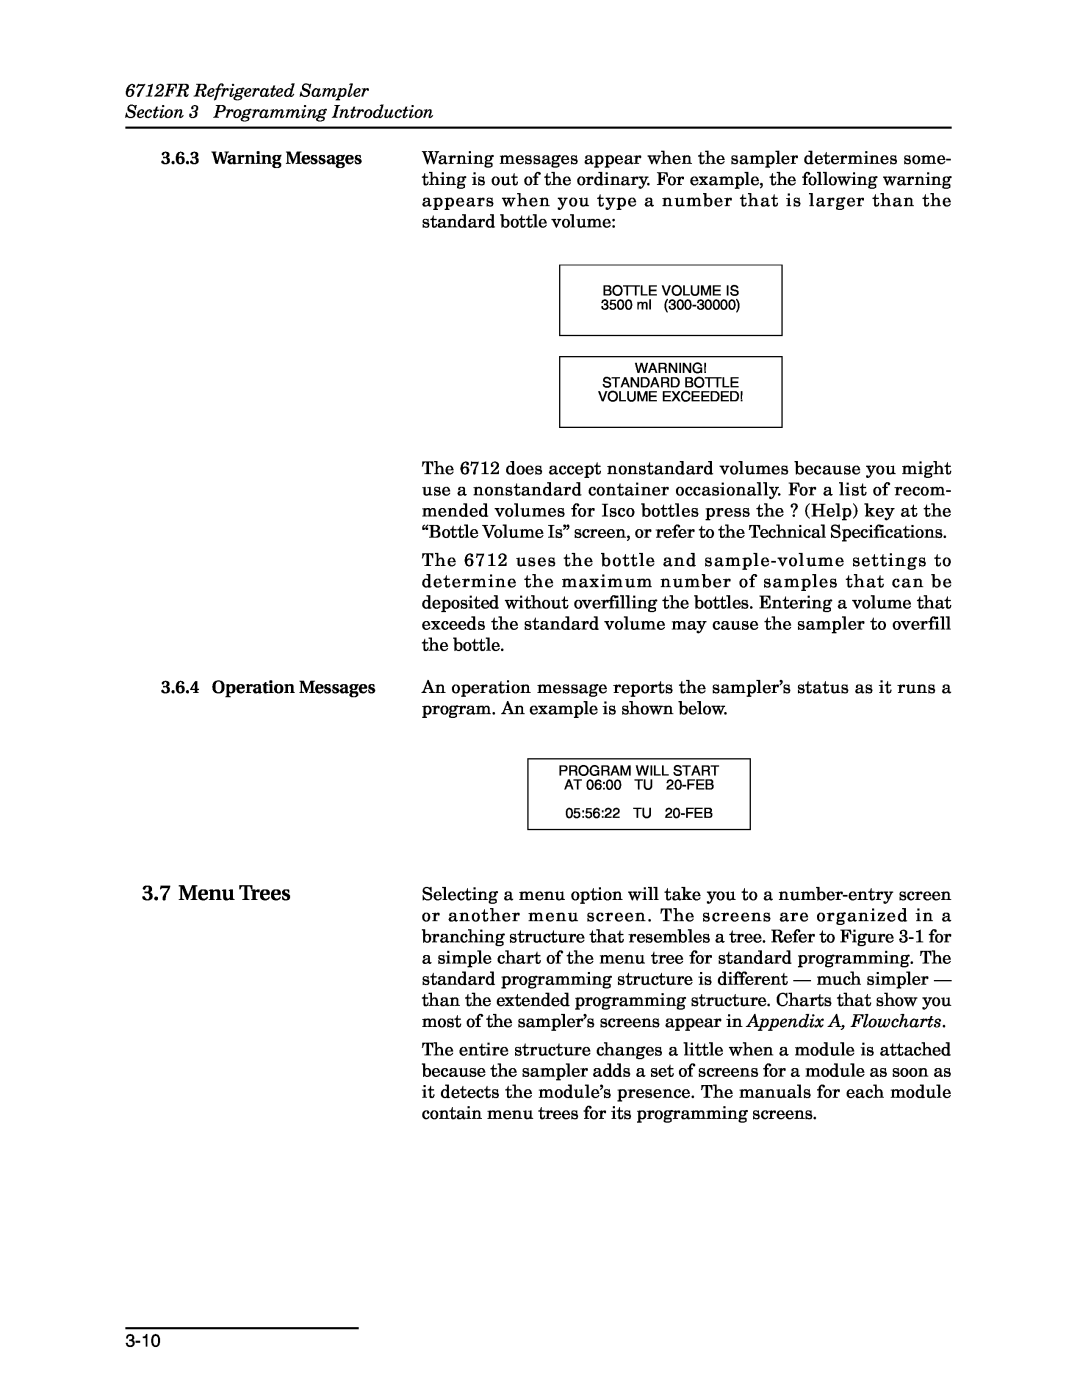 Teledyne manual Menu Trees, 6712FR Refrigerated Sampler Programming Introduction, BOTTLE VOLUME IS 3500 ml 